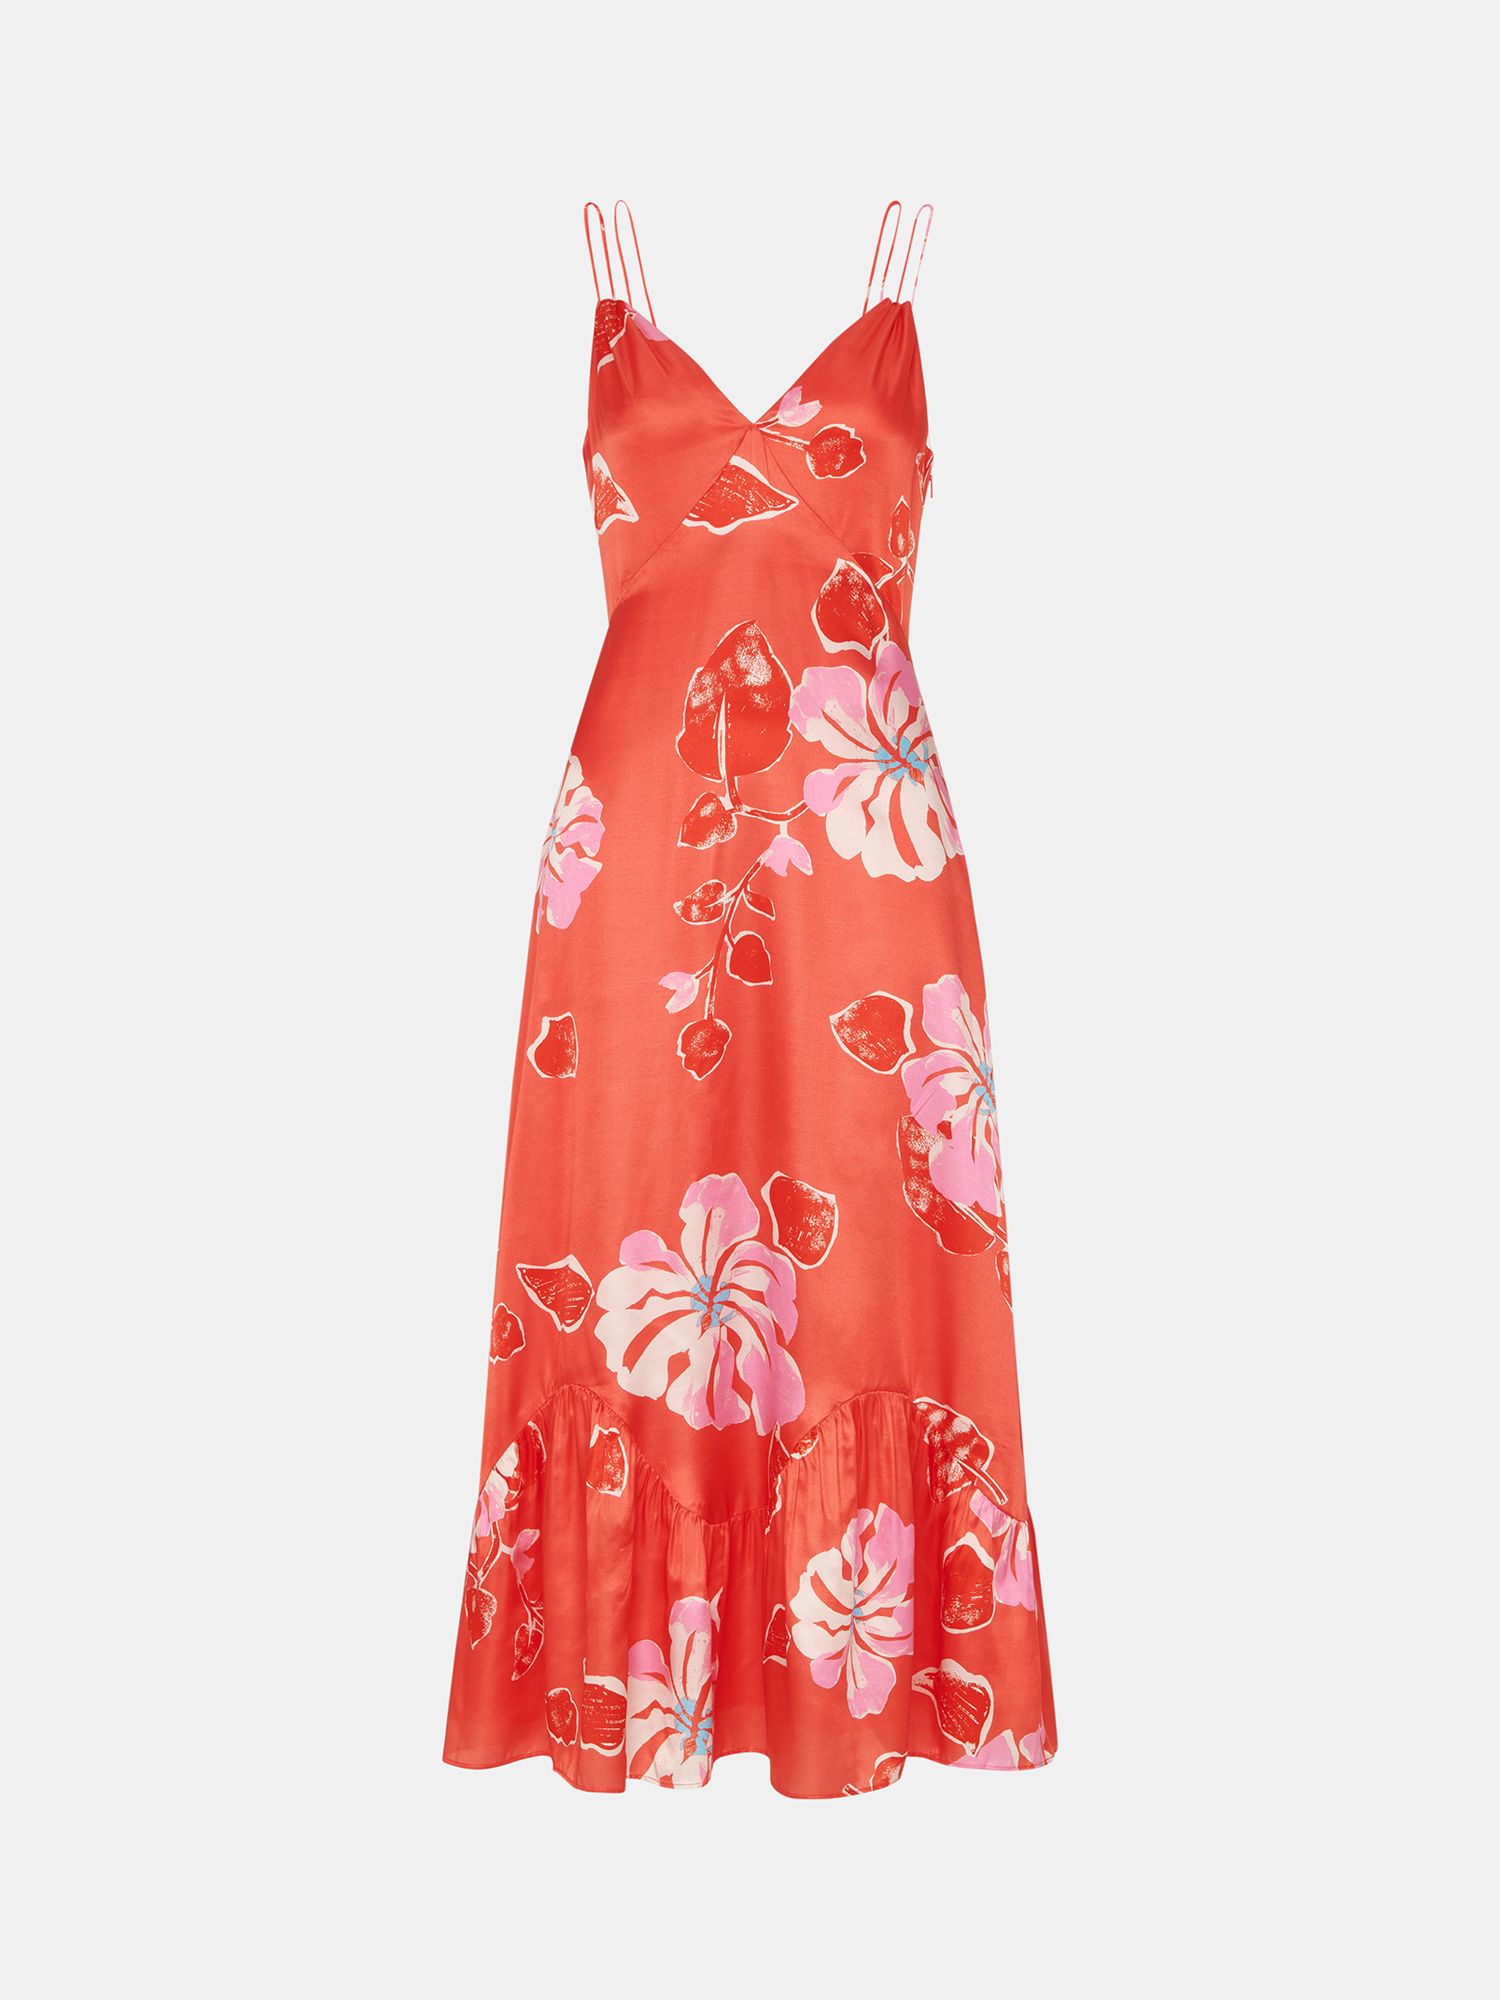 Whistles Raffa Hibiscus Print Maxi Dress, Coral/Multi, 6